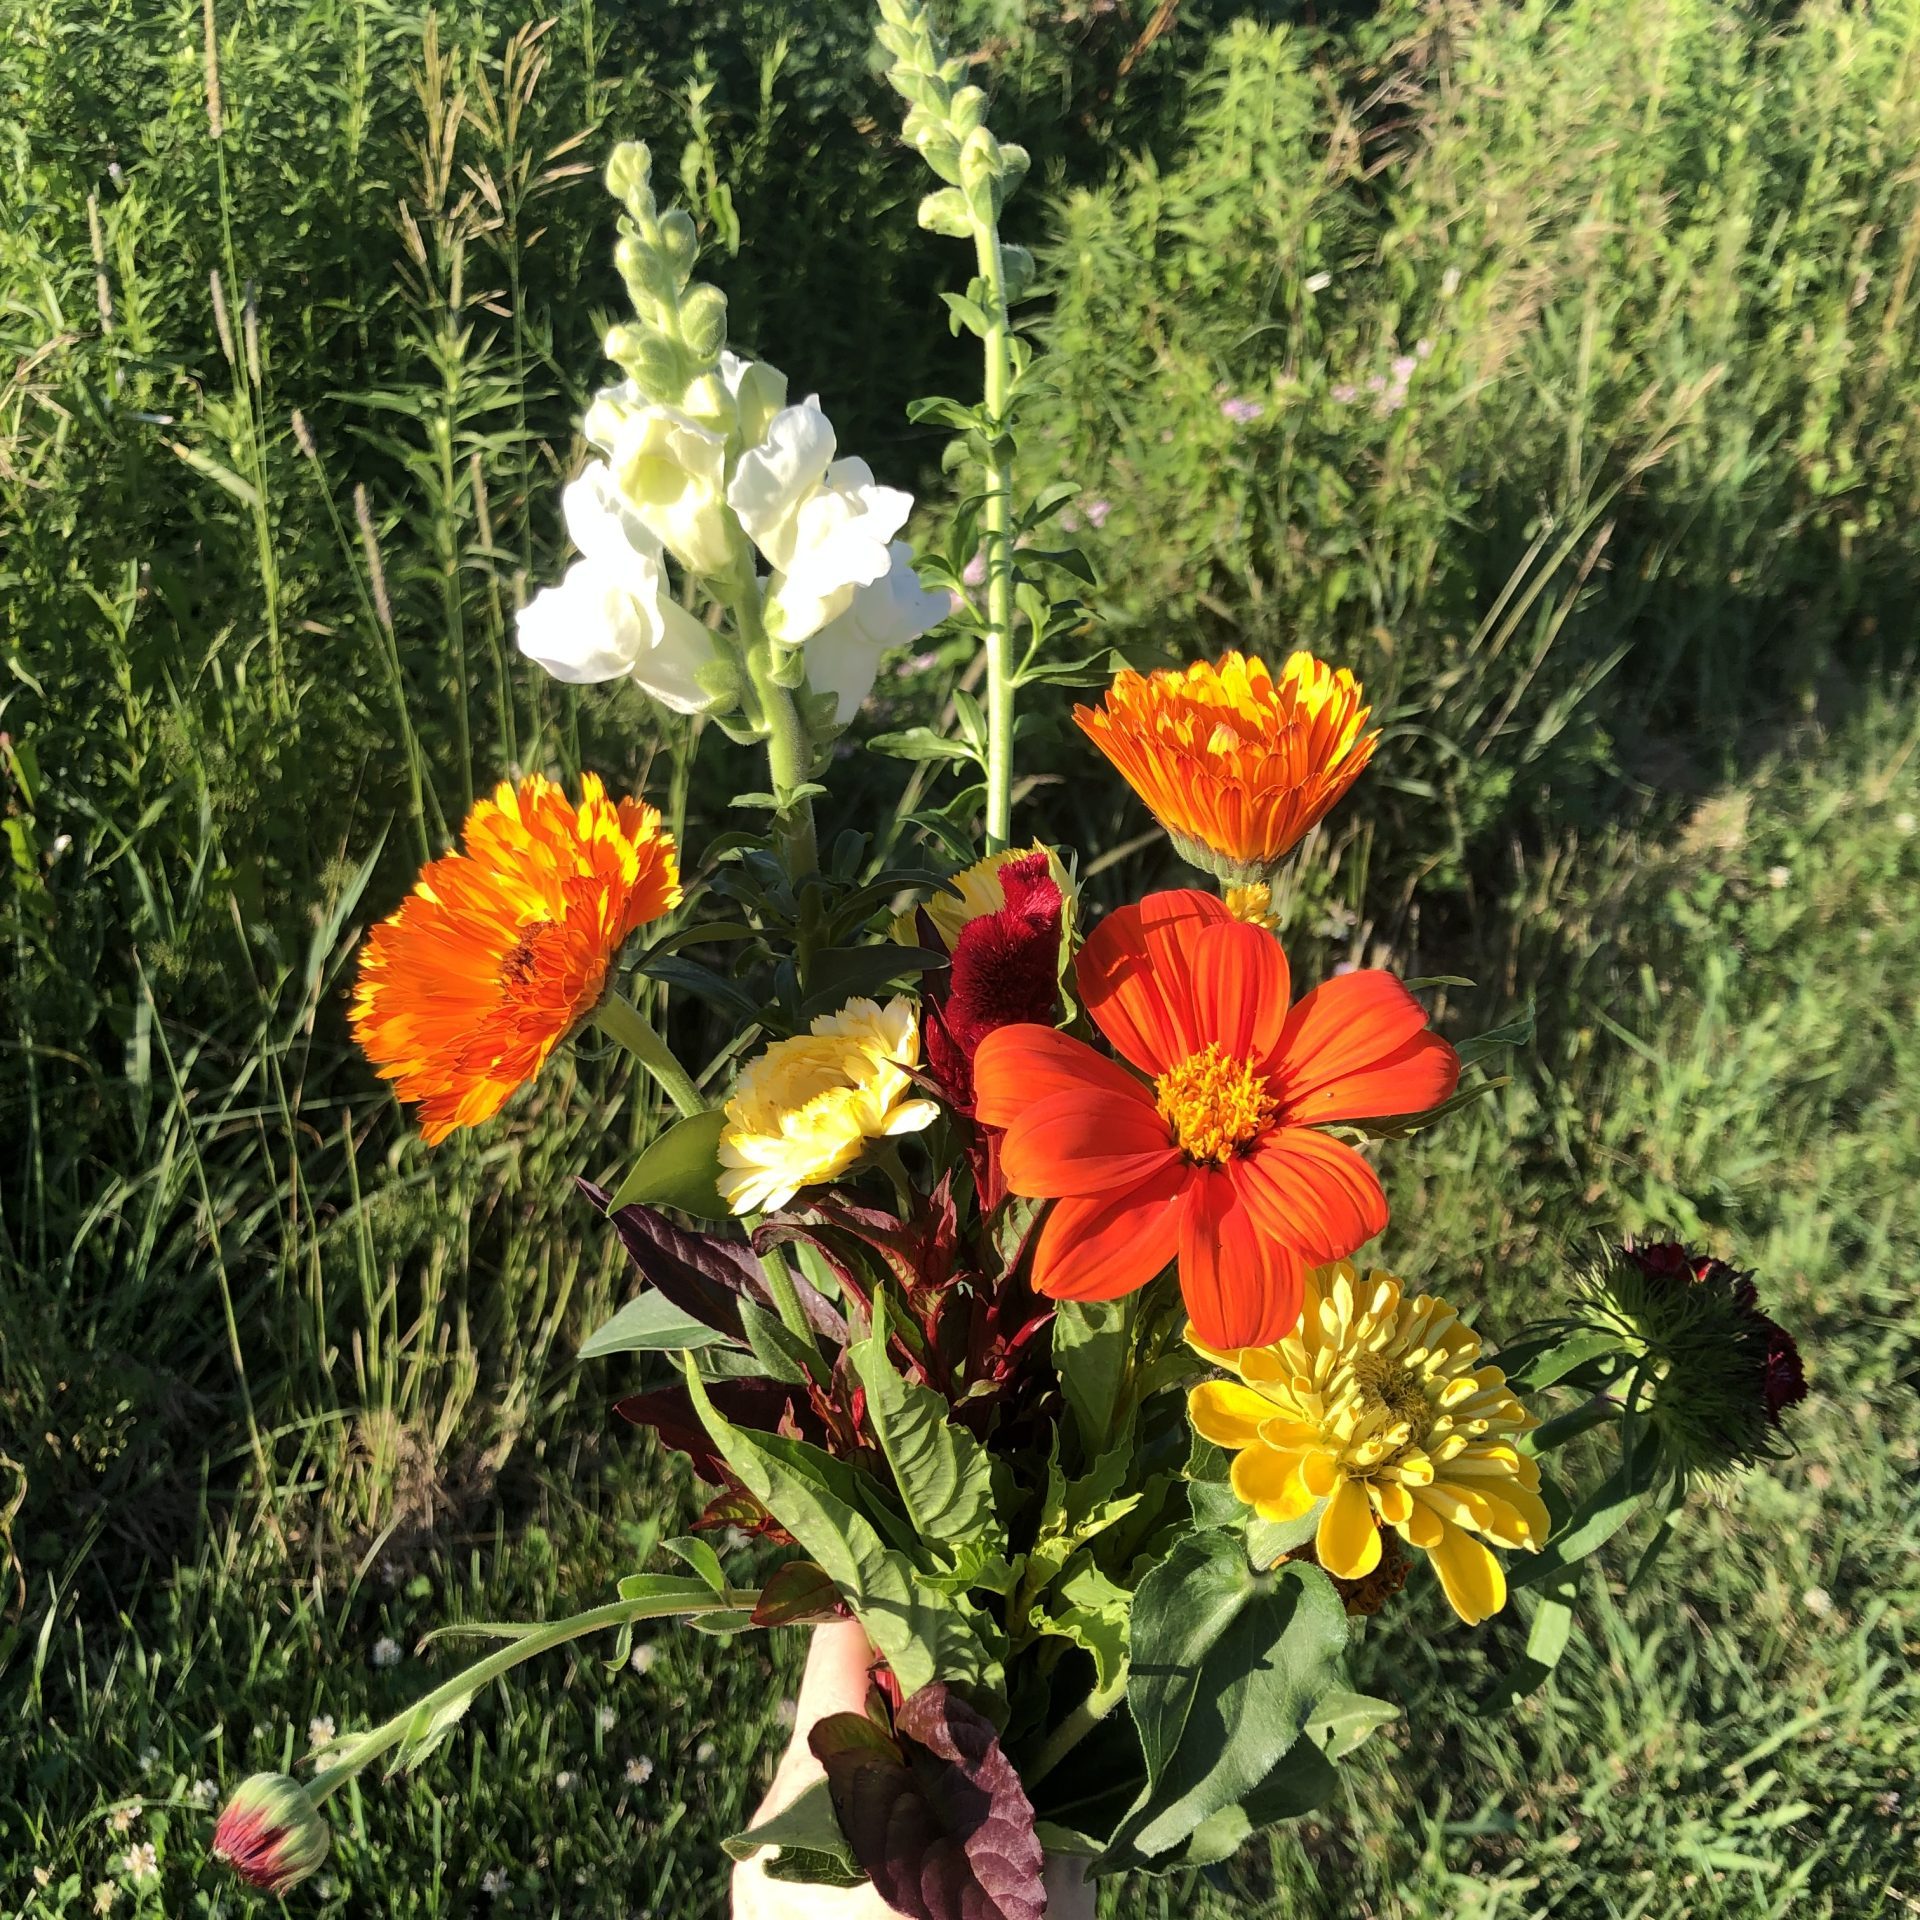 Caroline's flowers